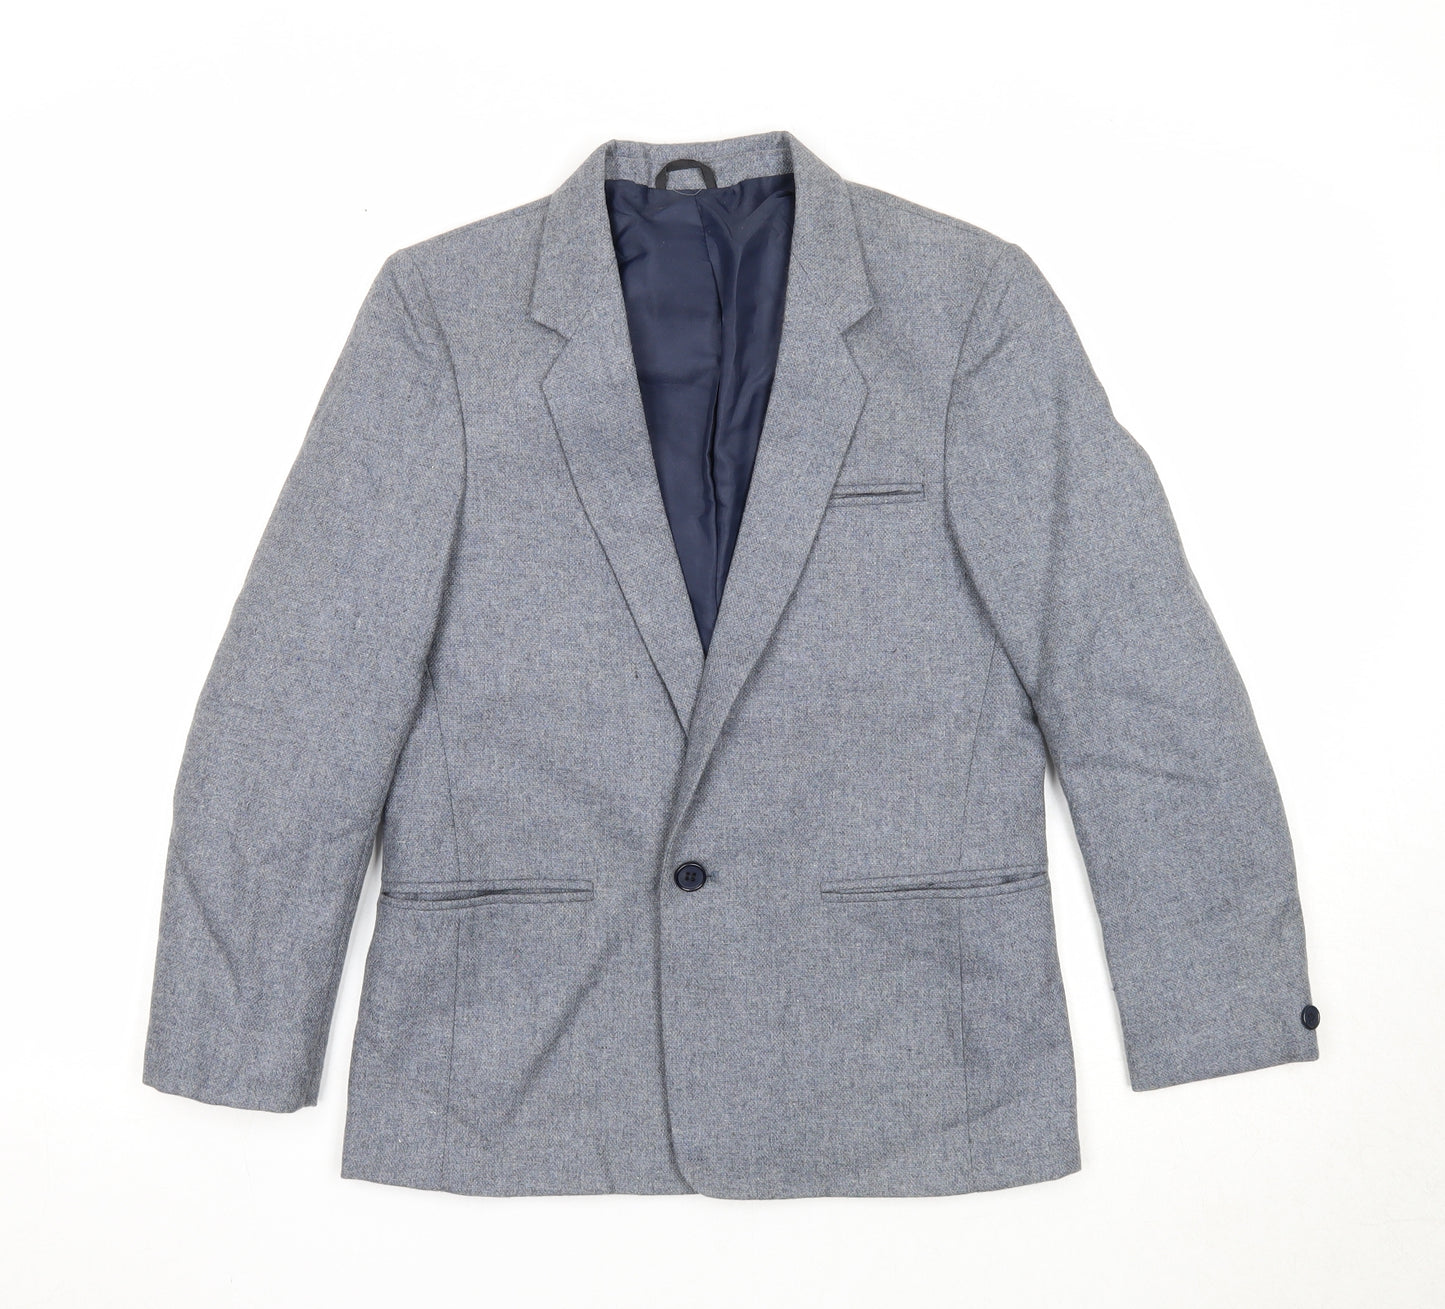 Beau Brummel Womens Grey Polyester Jacket Suit Jacket Size 8